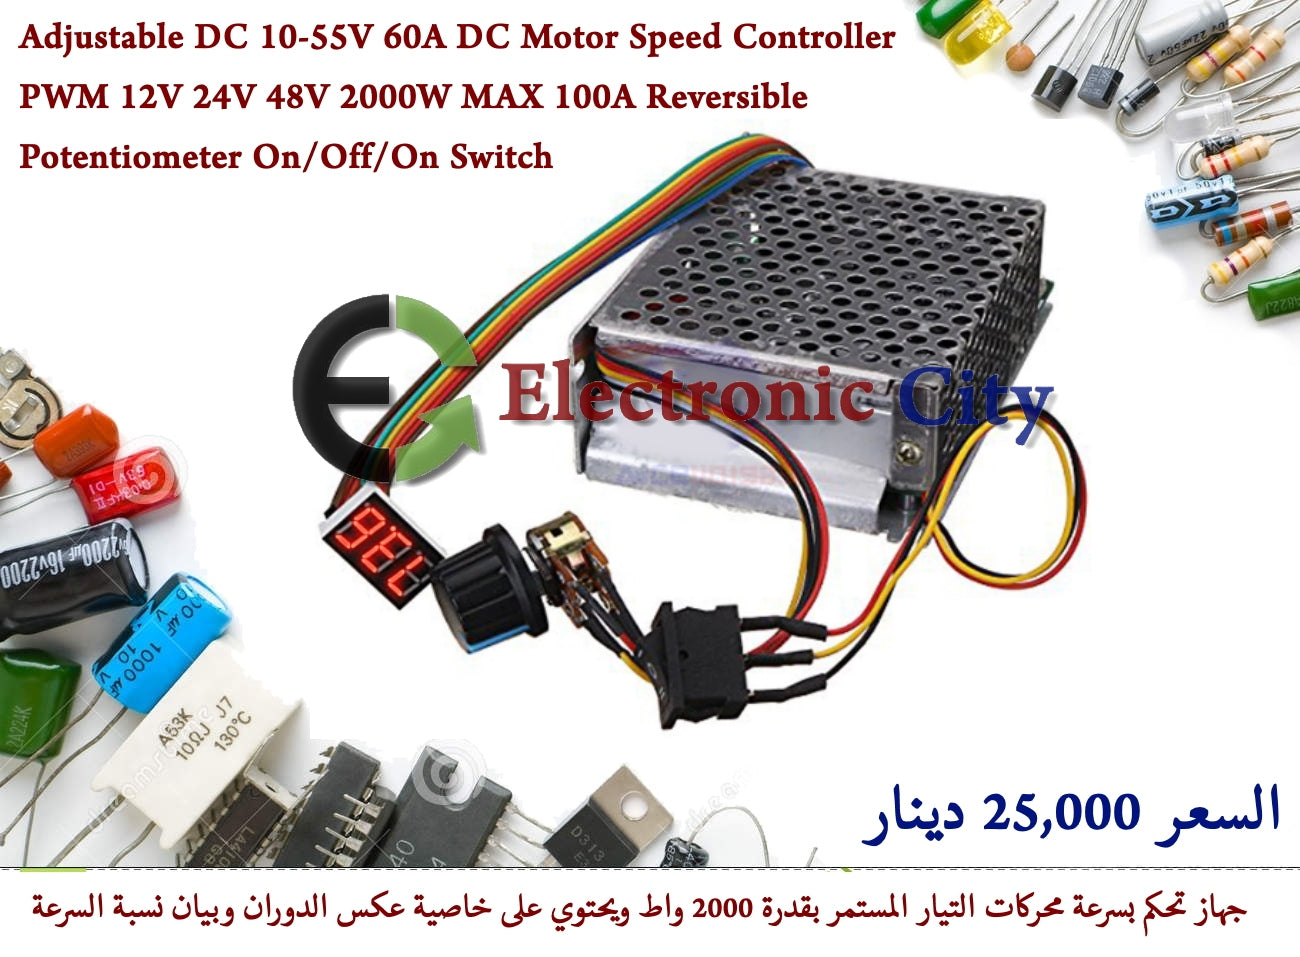 Adjustable DC 10-55V 60A DC Motor Speed Controller PWM 12V 24V 48V 2000W MAX 100A Reversible Potentiometer On/Off/On Switch